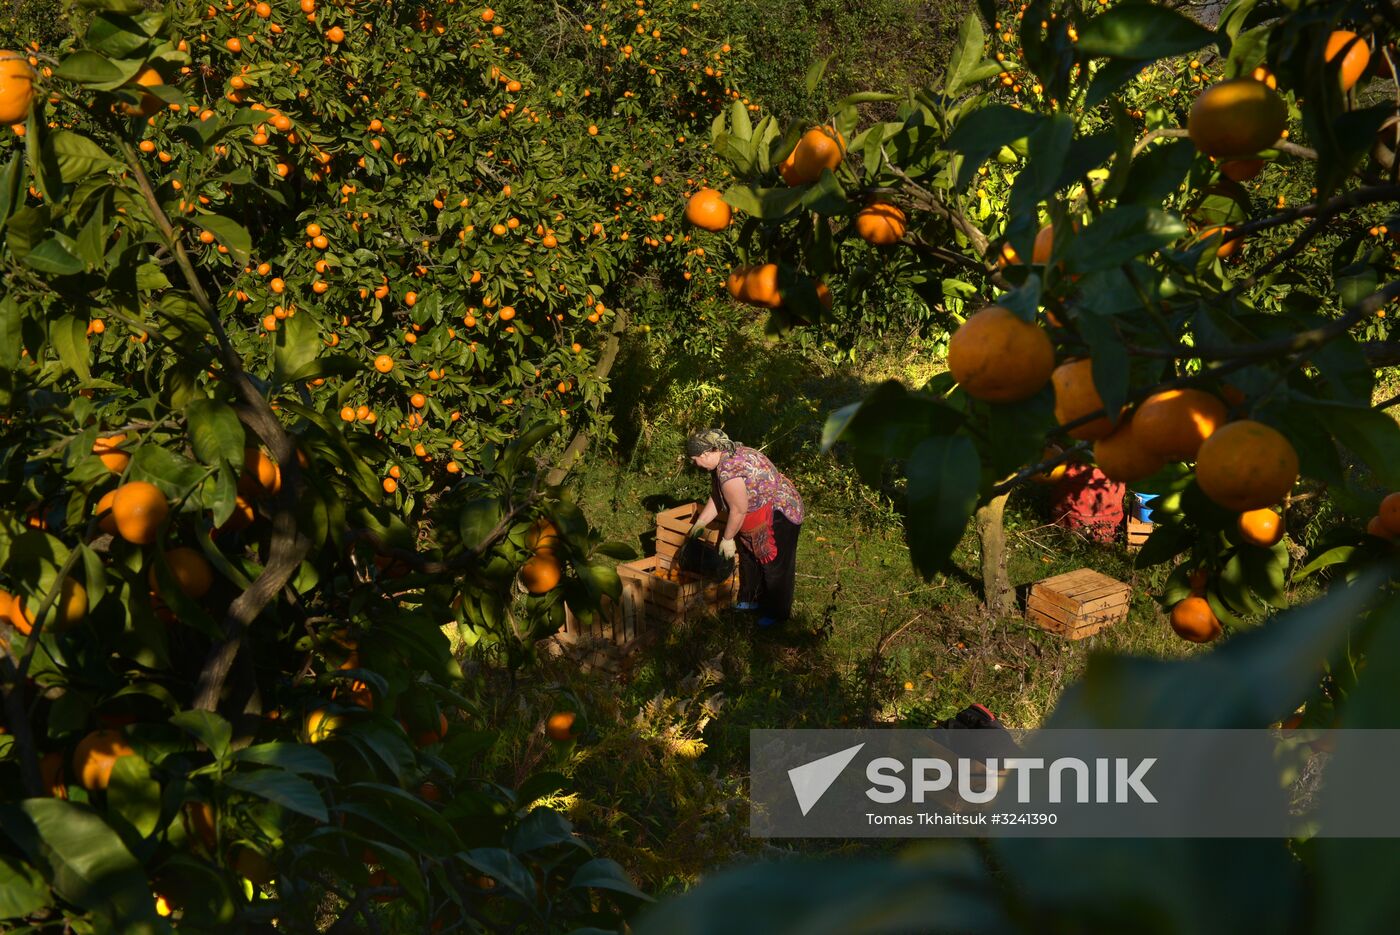 Tangerine harvesting